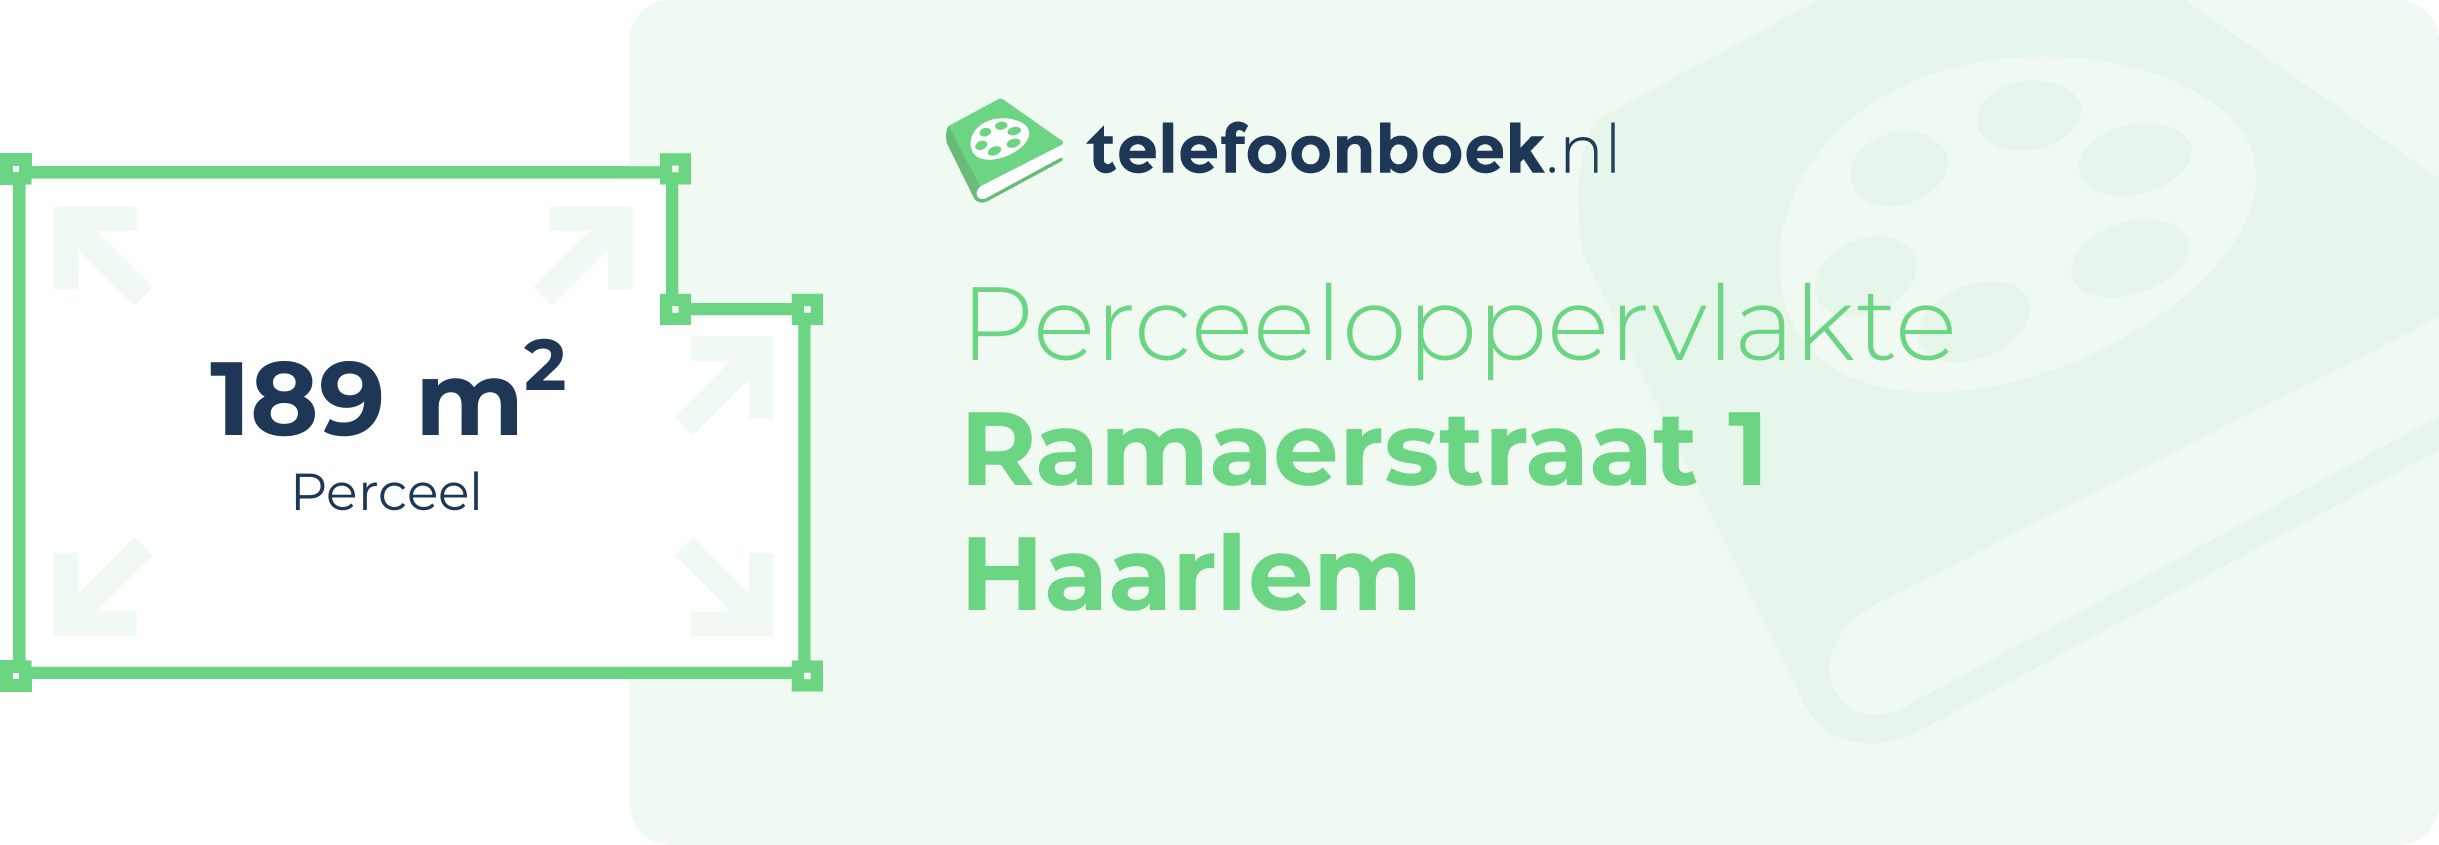 Perceeloppervlakte Ramaerstraat 1 Haarlem